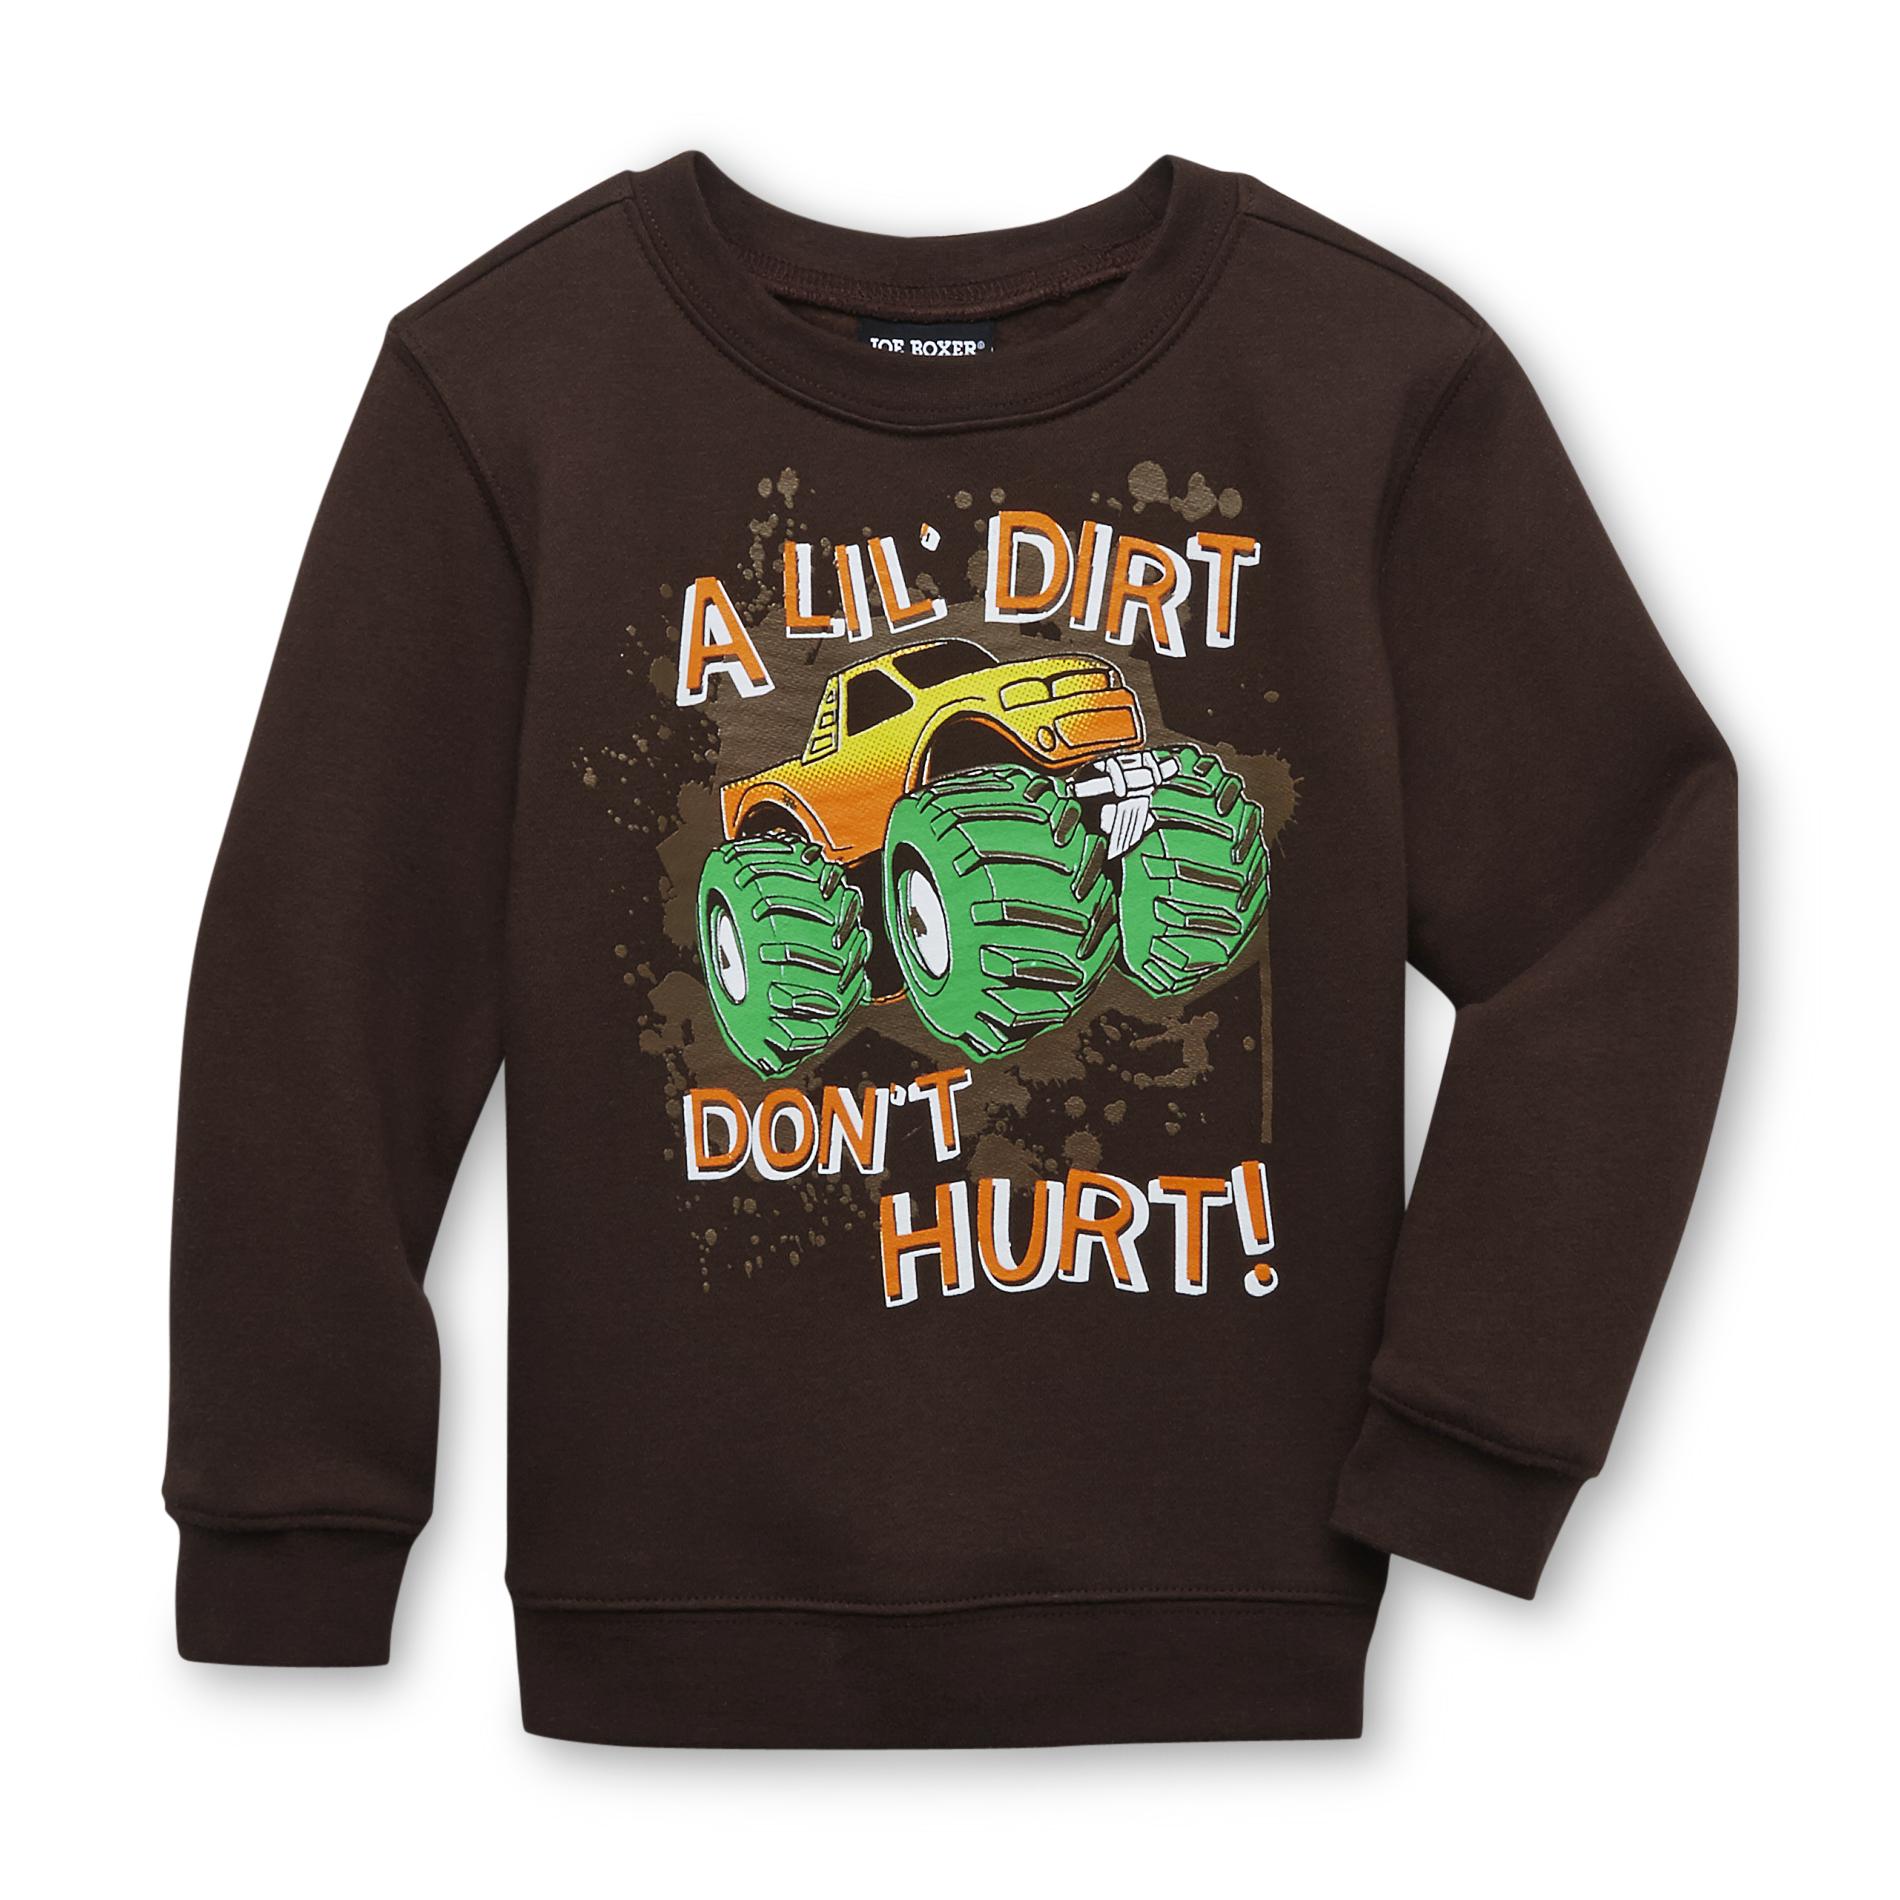 Joe Boxer Infant & Toddler Boy's Graphic Sweatshirt - Monster Truck